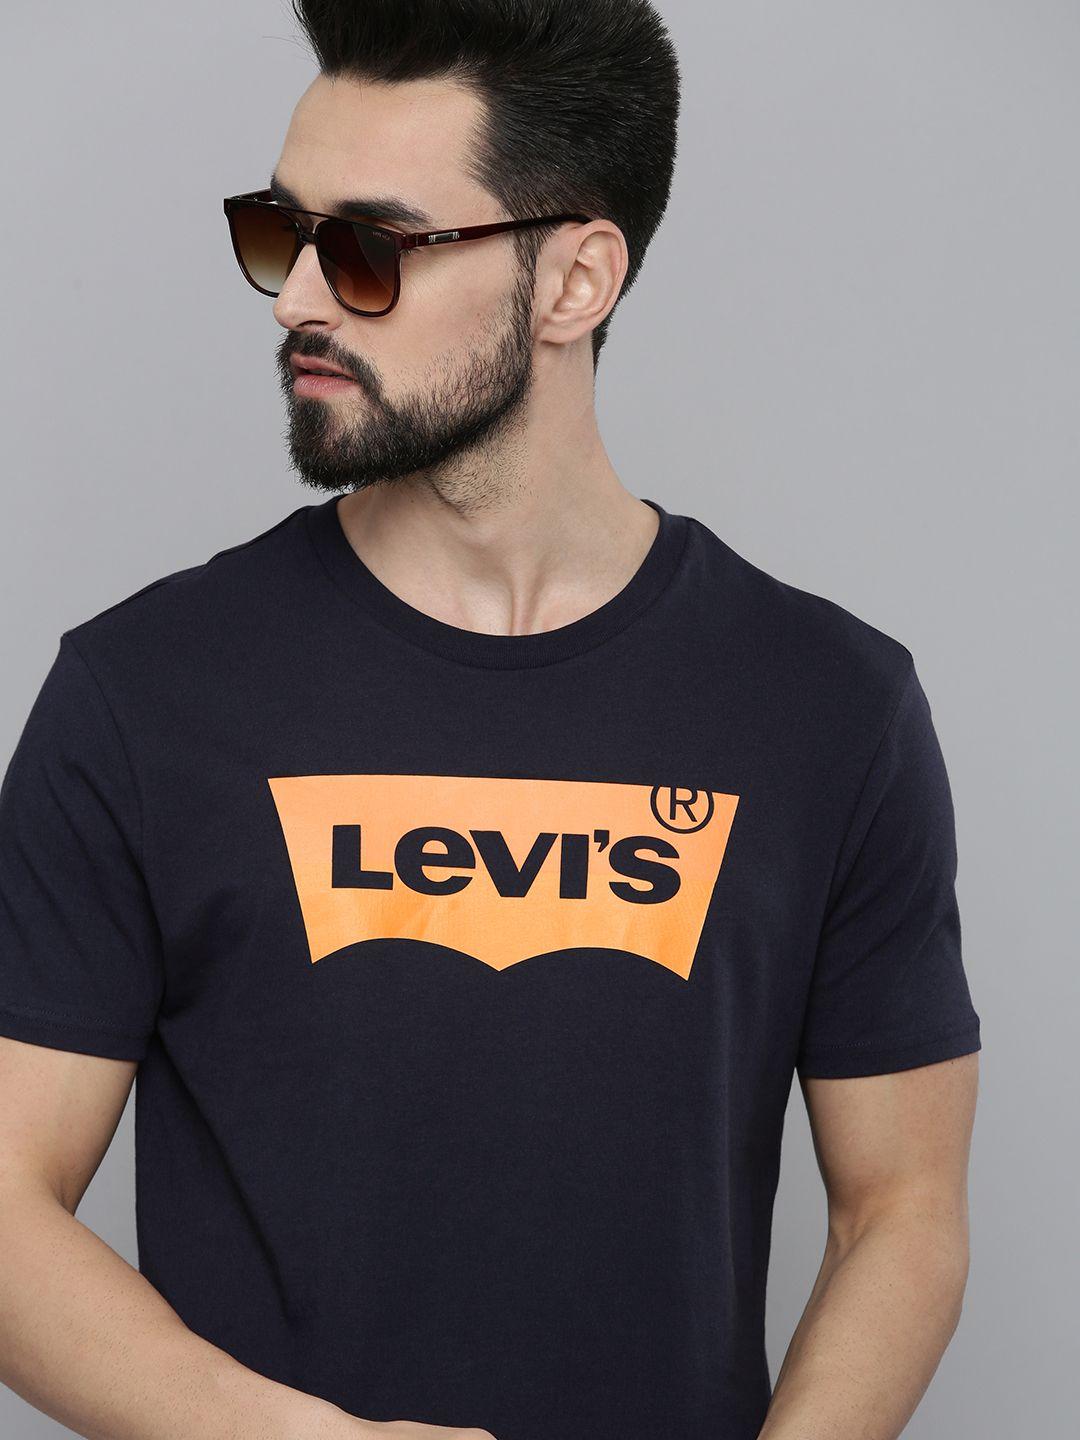 levis-men-navy-blue-&-orange-brand-logo-printed-pure-cotton-casual-t-shirt